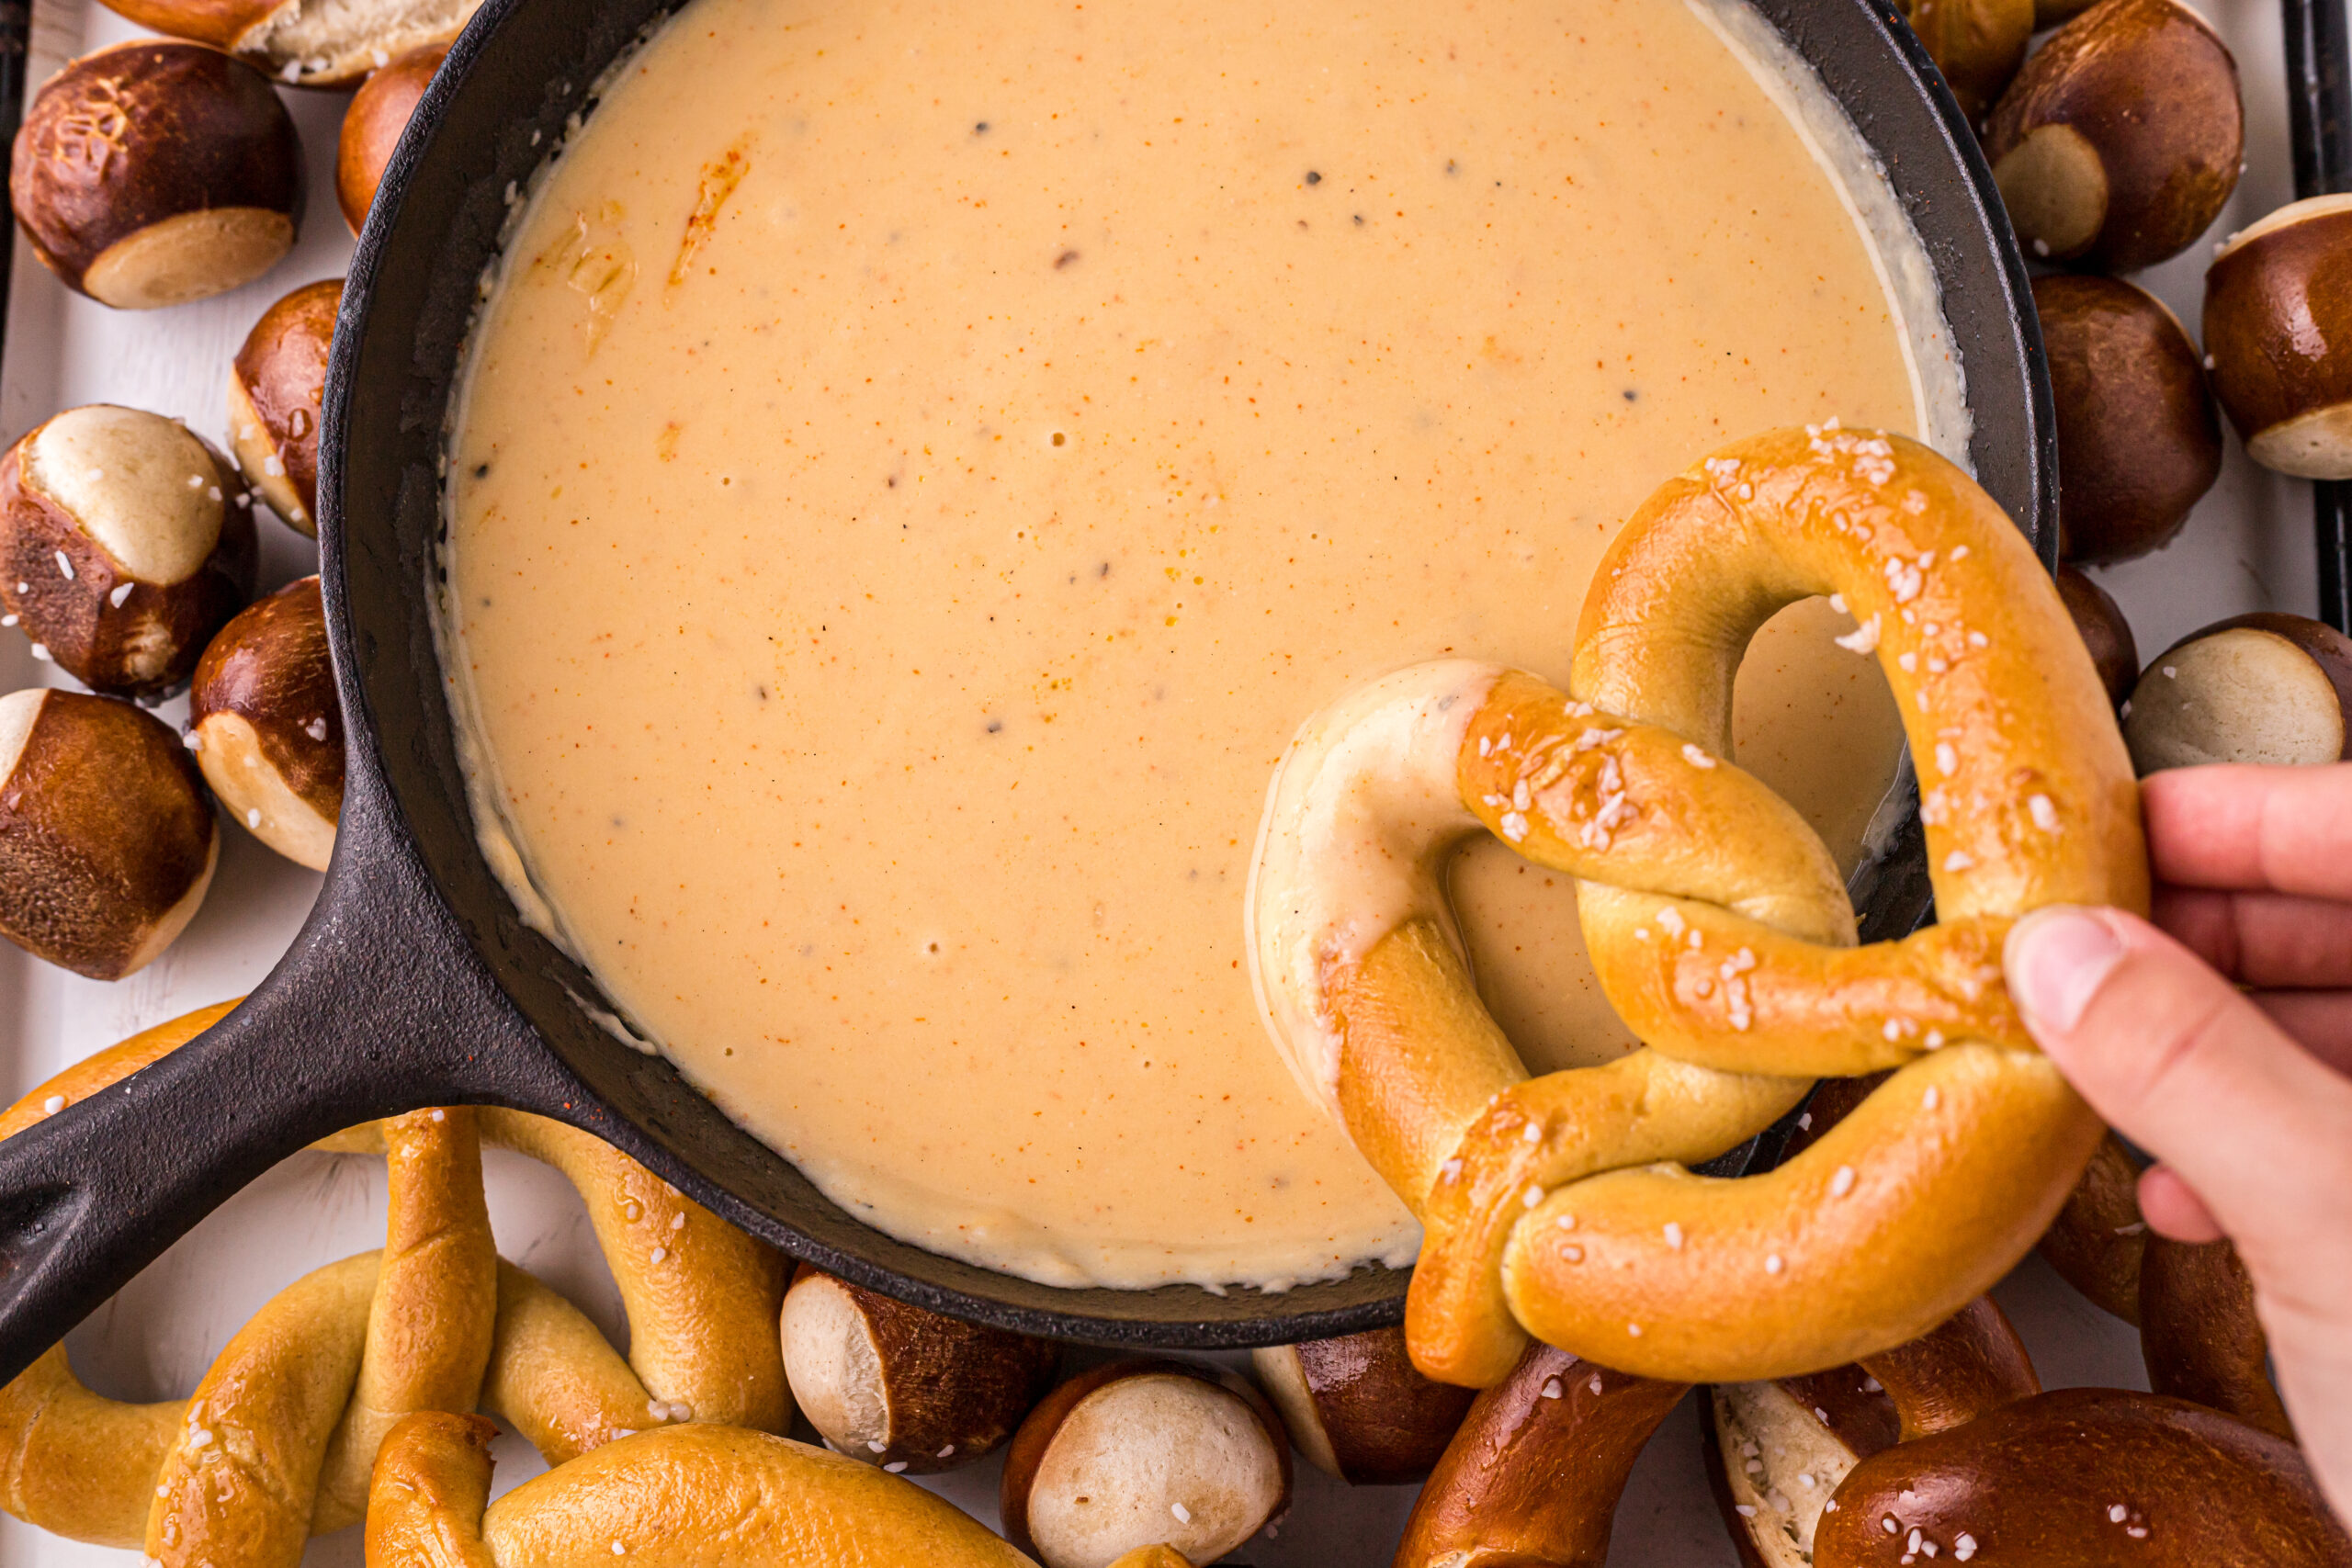 pretzels dipped in beer cheese dip 